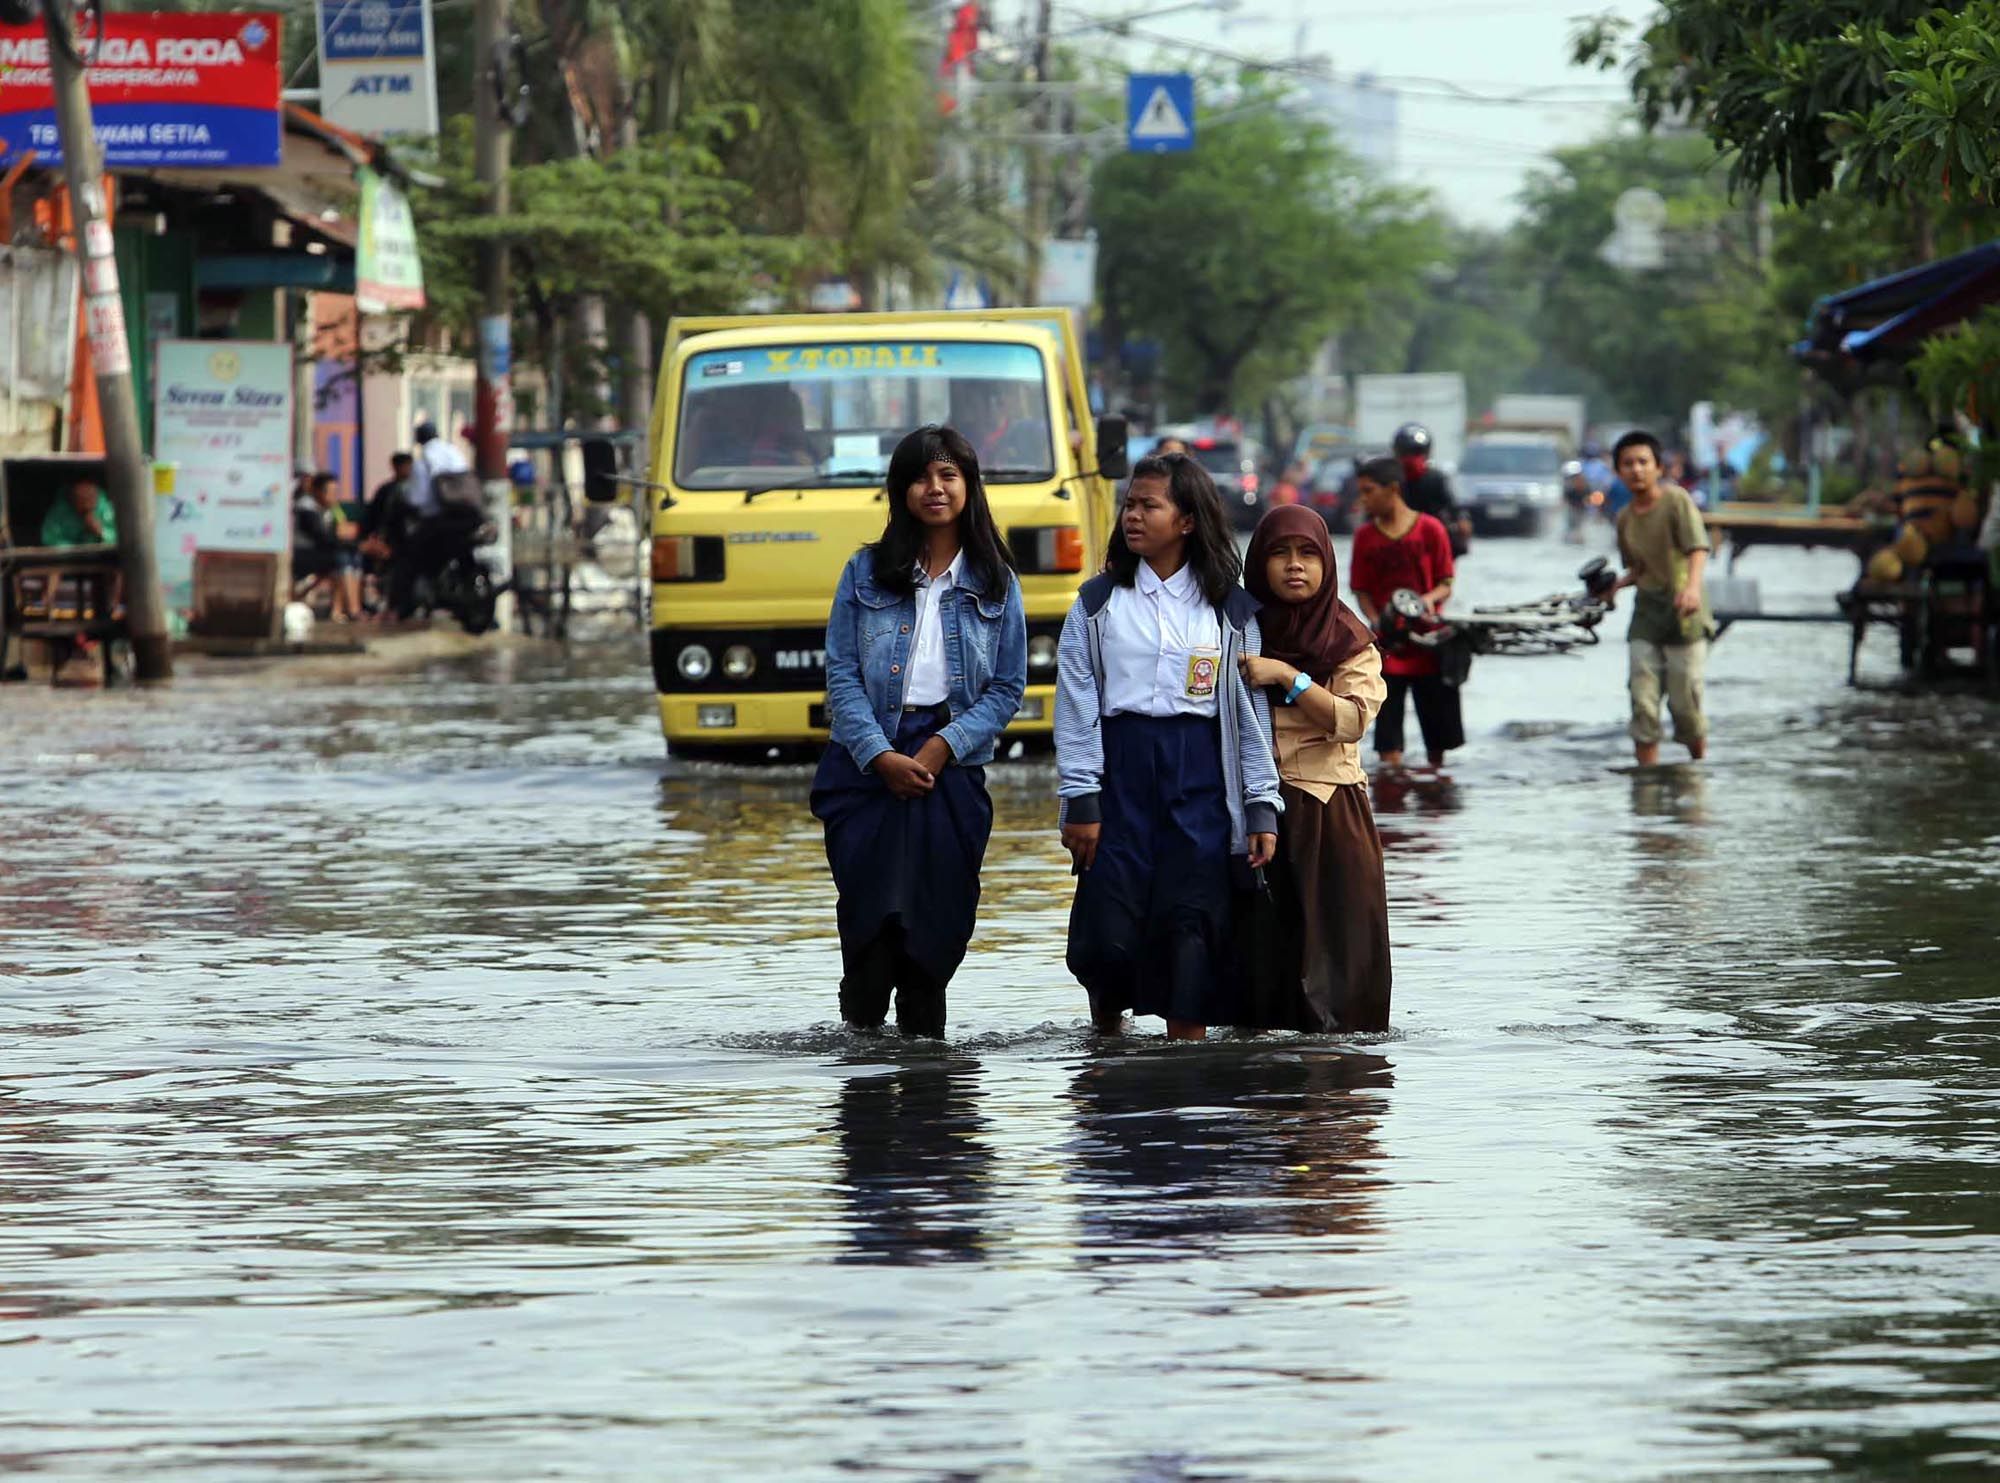 Siswa sekolah melintasi banjir yang menggenangi Jalan Kramat Jaya, Semper Barat, Jakarta Utara, Rabu (12/3/2014). Setiap kali hujan lebat mengguyur kawasan itu, jalan tersebut selalu banjir. Hal itu diperparah oleh sistem drainase yang buruk. Warta Kota/angga bhagya nugraha